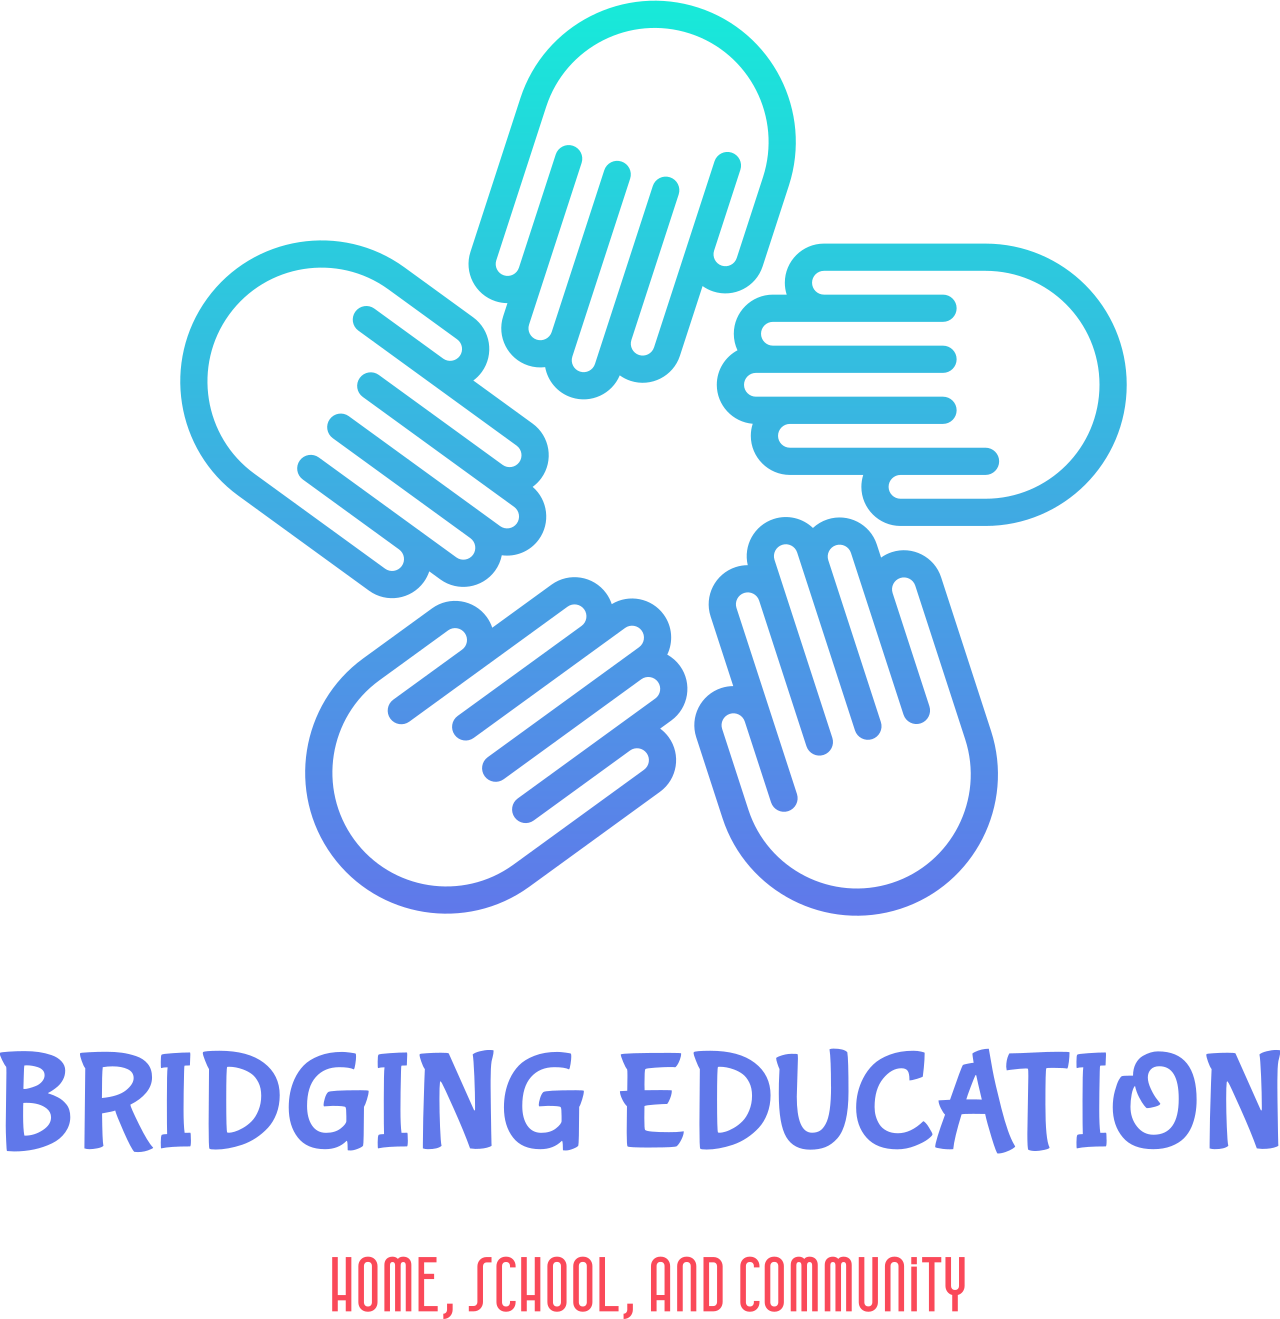 Bridging Education 's logo